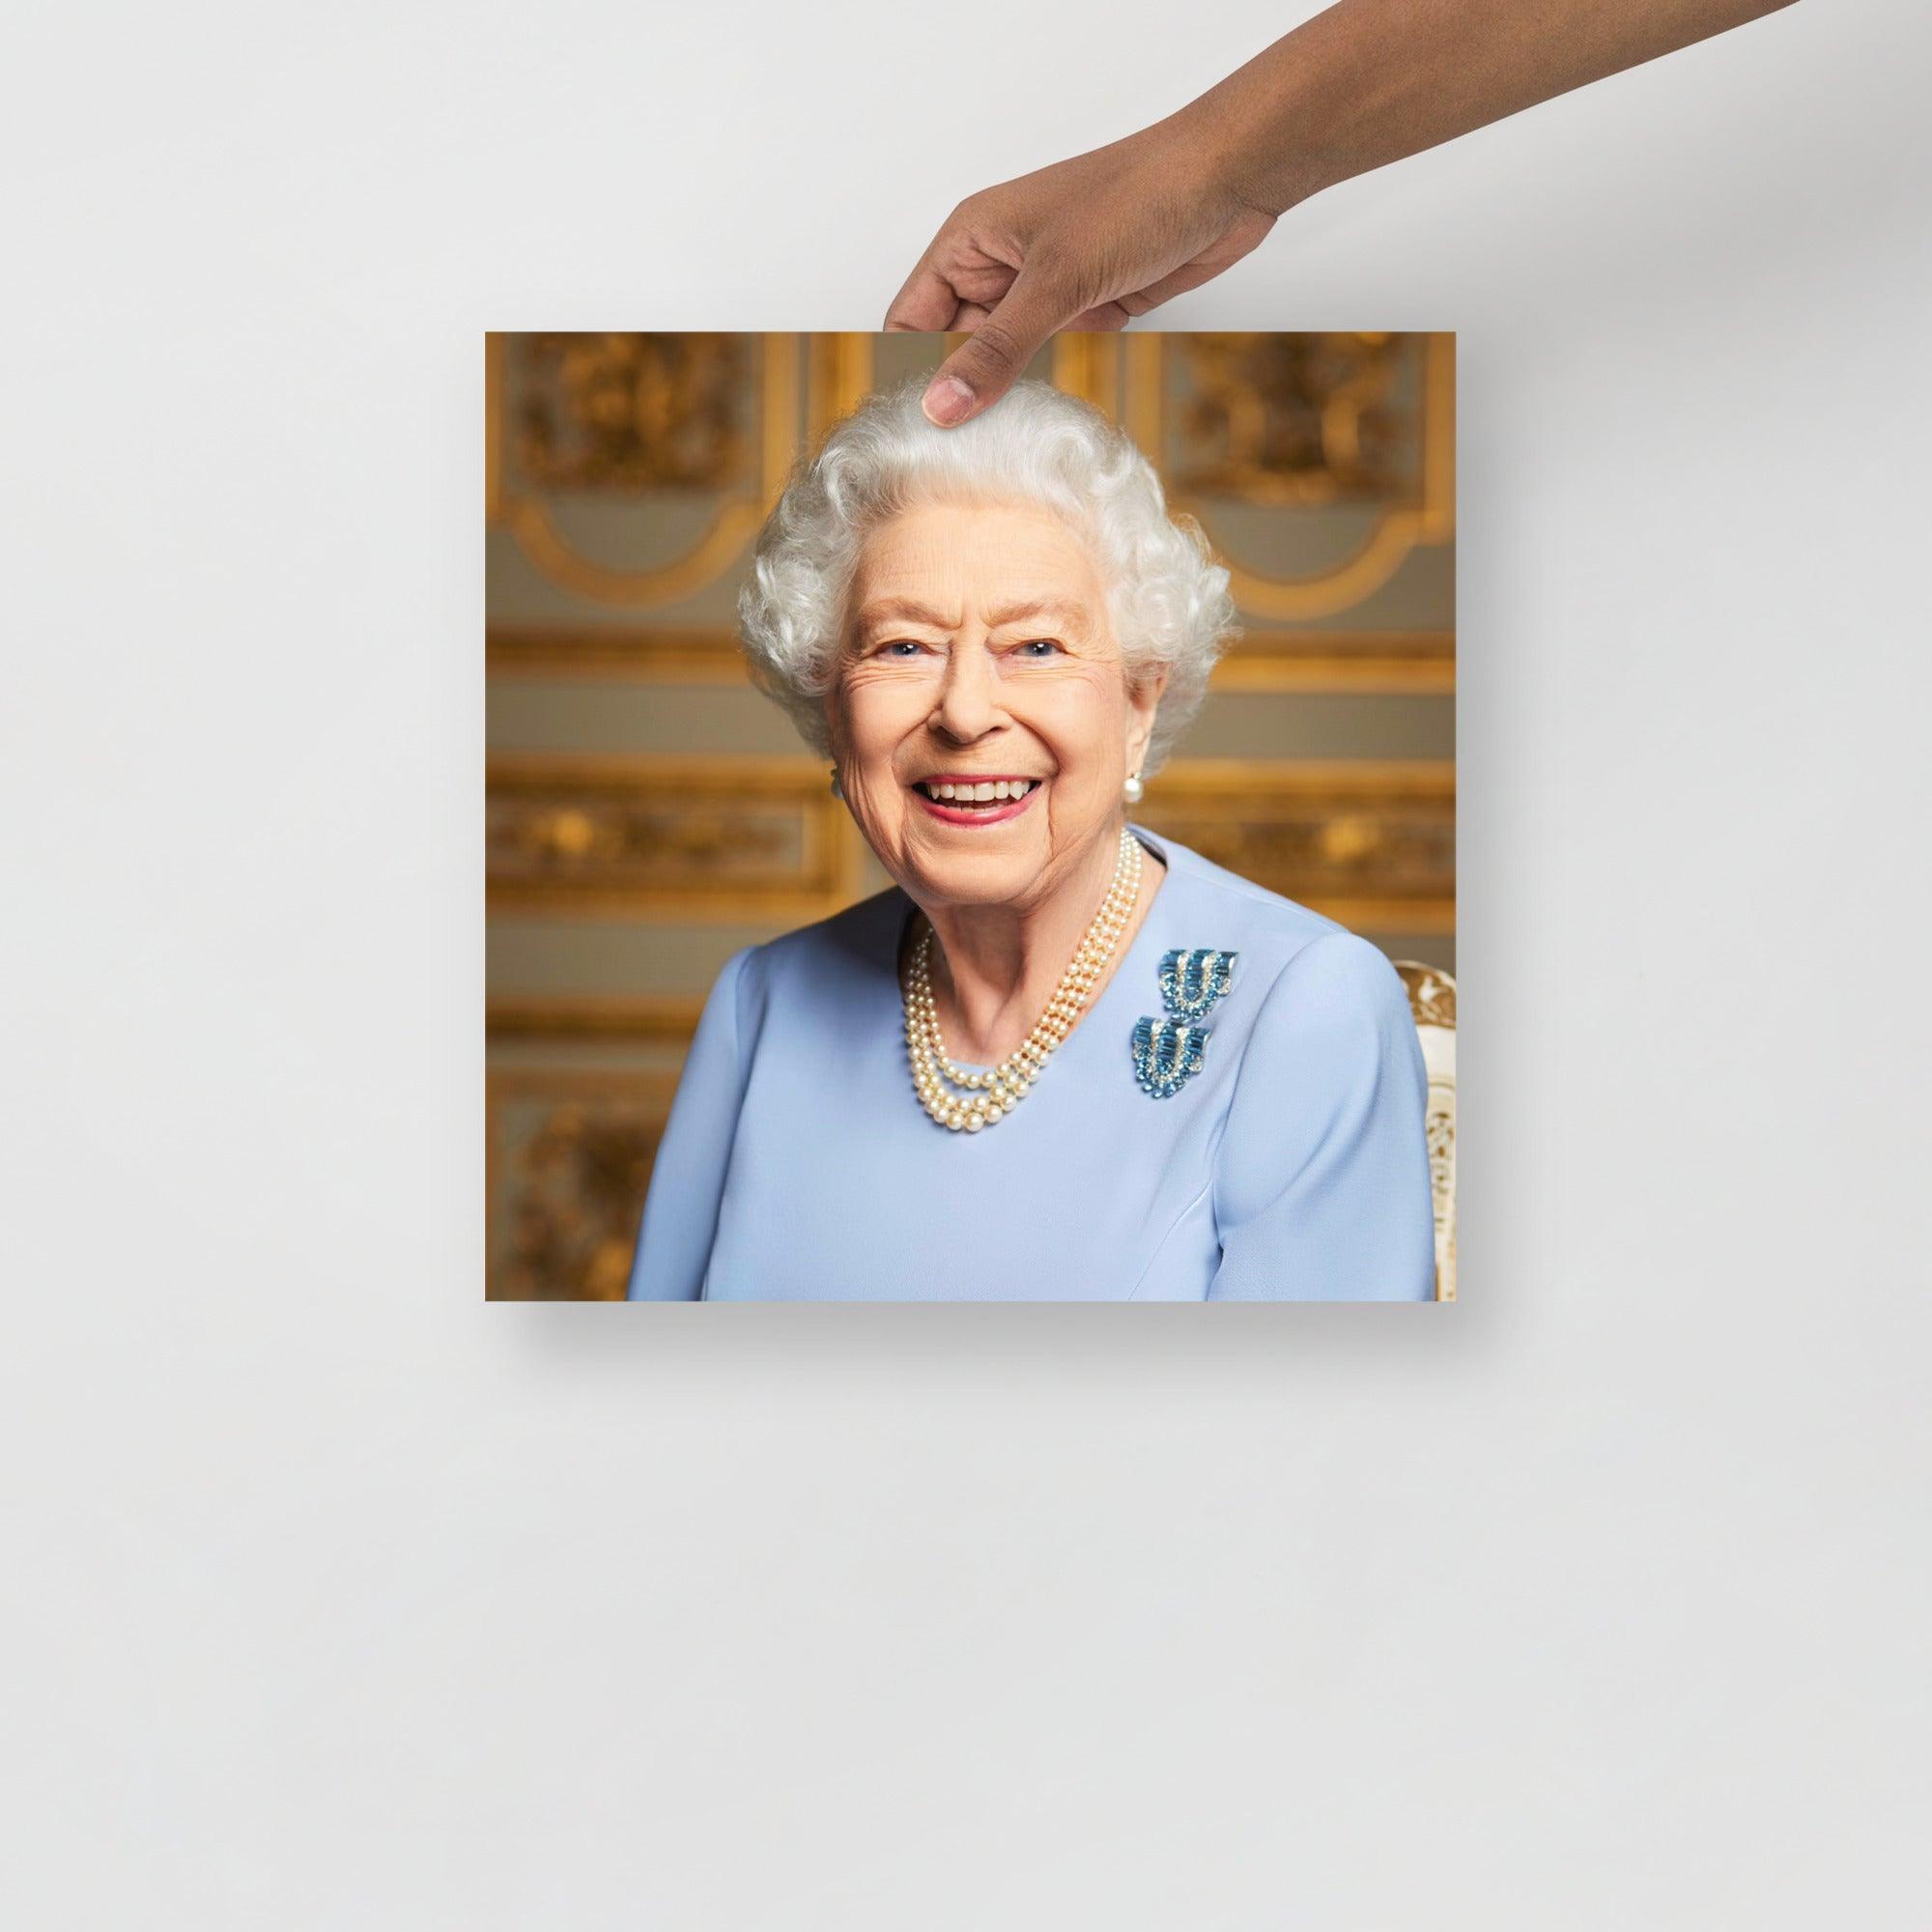 A Platinum Jubilee of Elizabeth II Official Portrait (Posthumous Release) poster on a plain backdrop in size 14x14”.